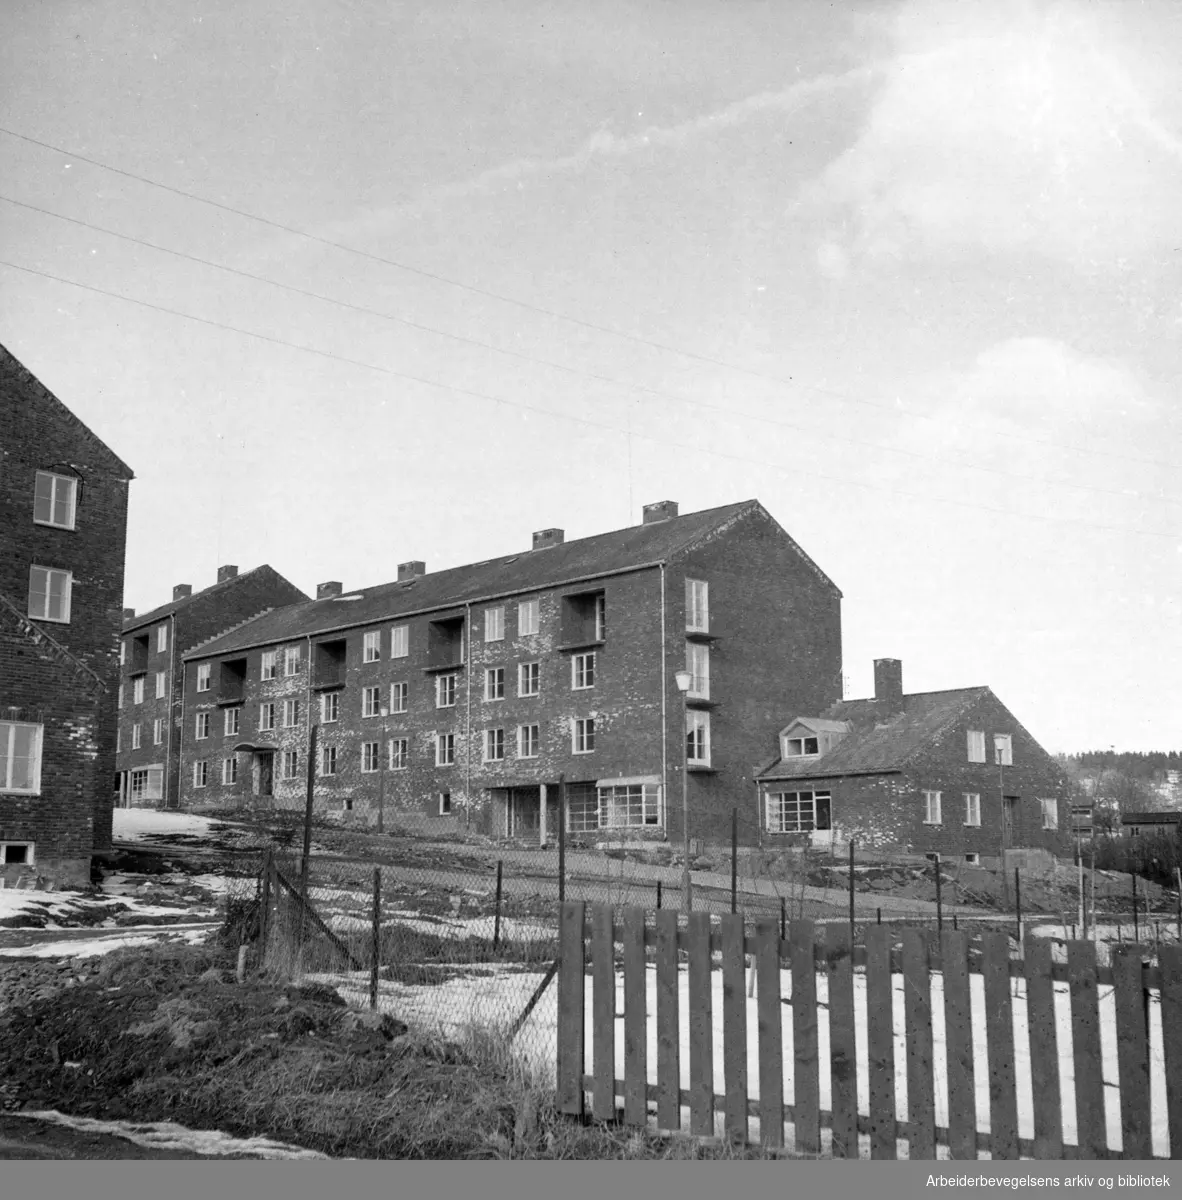 Sogn, Studentbyen under bygging. April 1952